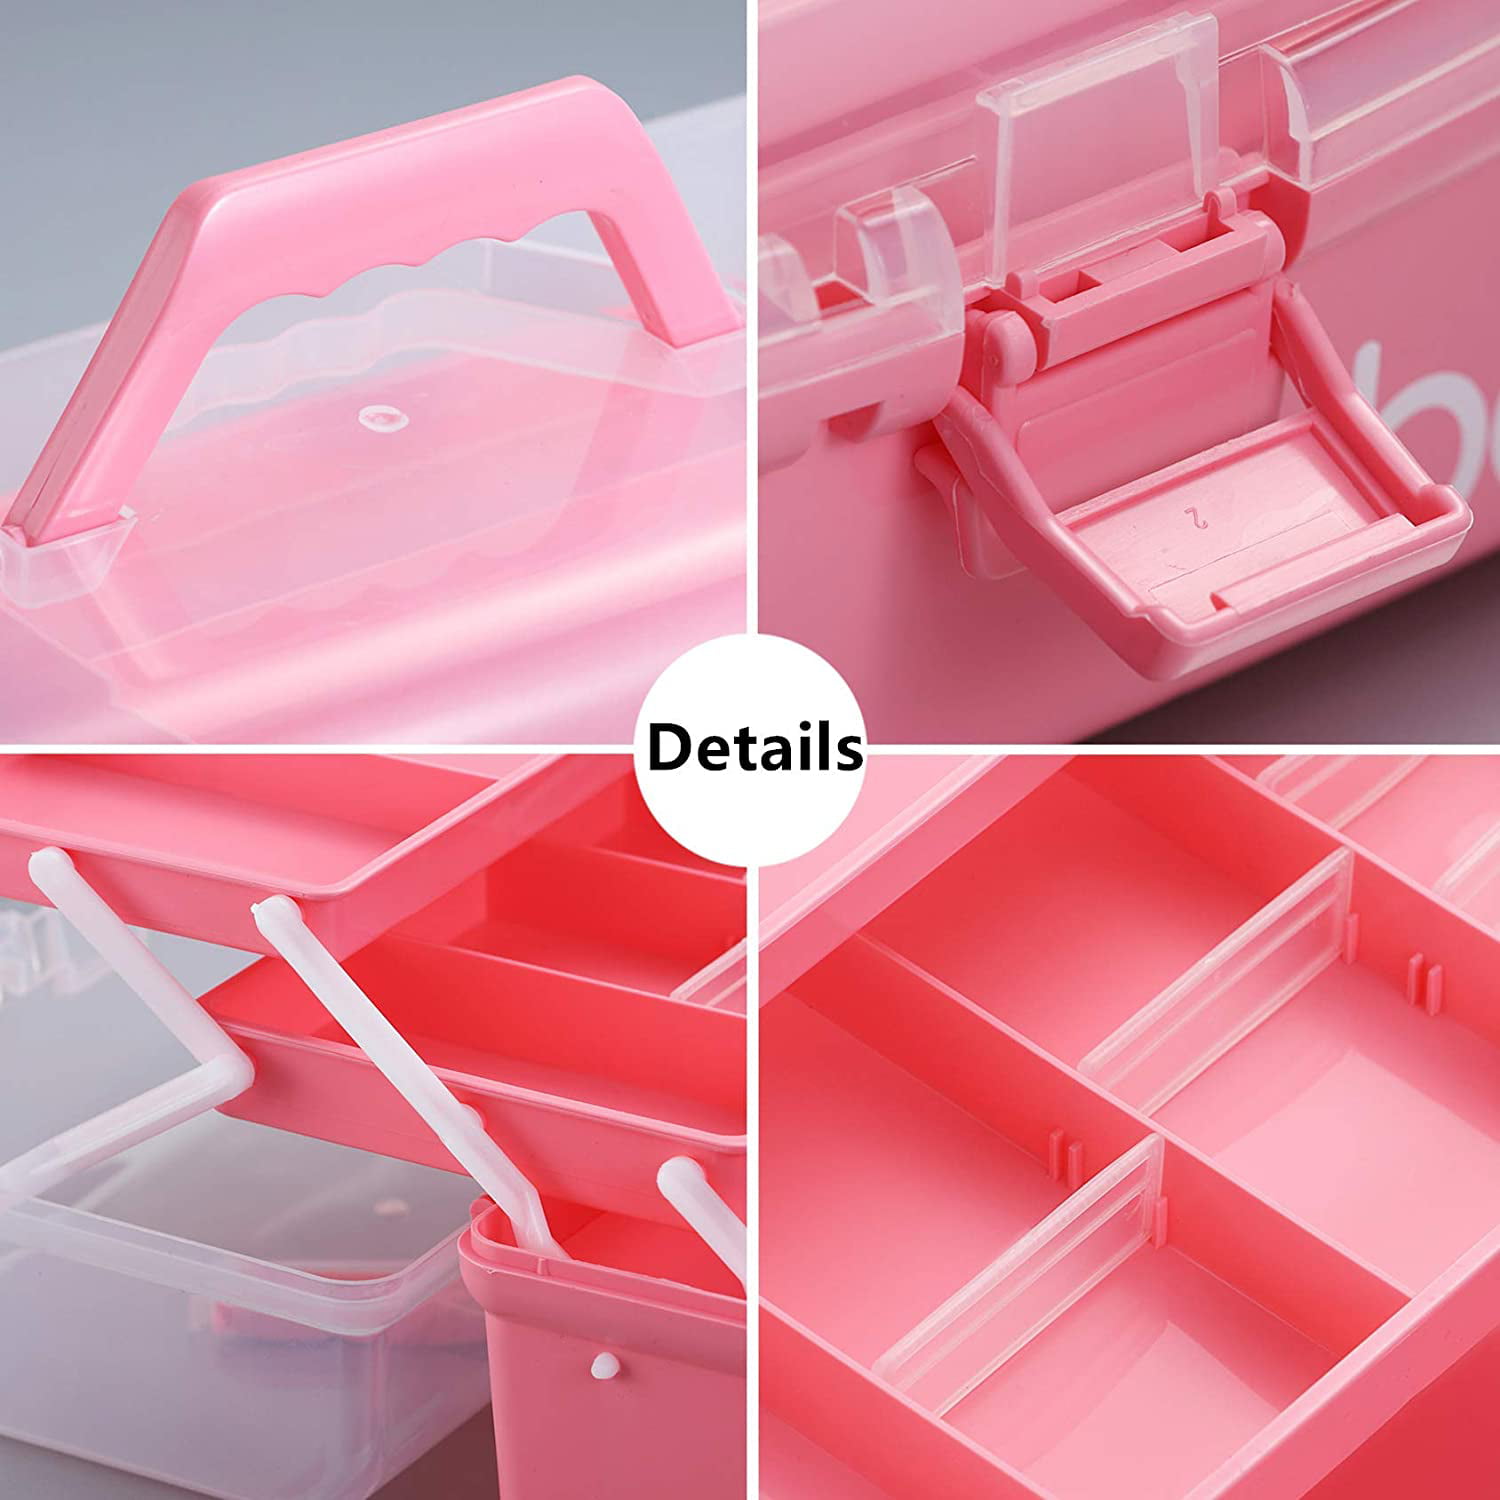  Kinsorcai 12'' Three-Layer Clear Art Box Organizer,  Multipurpose Plastic Craft Box Organizer, Art Supply Storage Box/Sewing  Box/Tool Box with Handle (Blue) : Arts, Crafts & Sewing